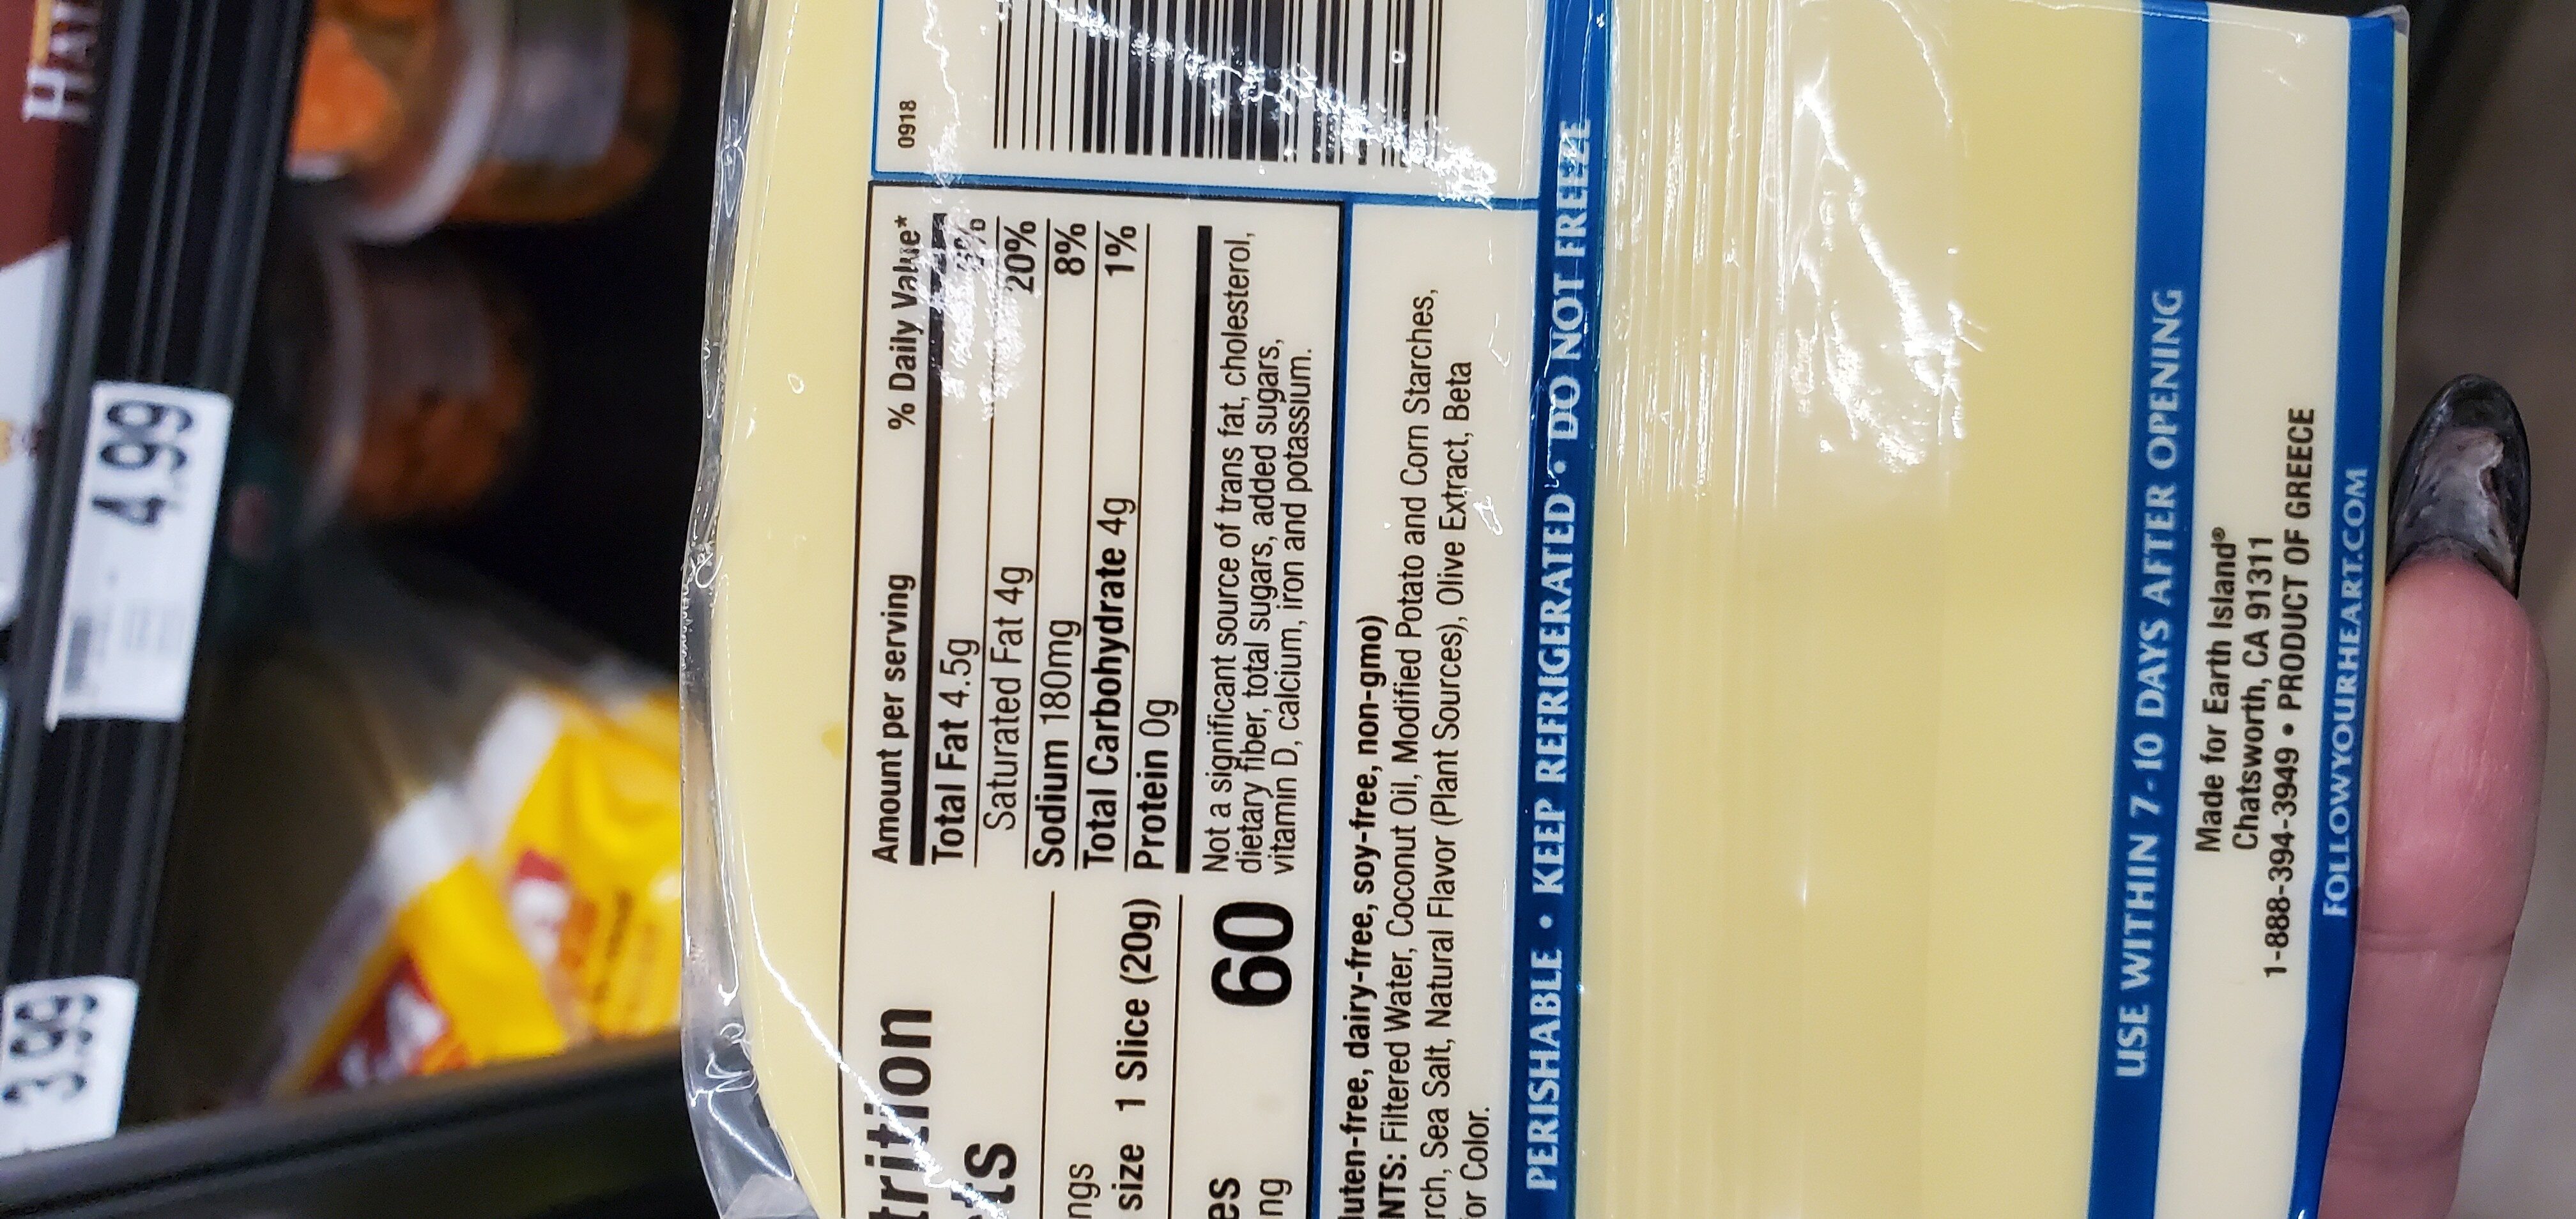 cheese - Ingredients